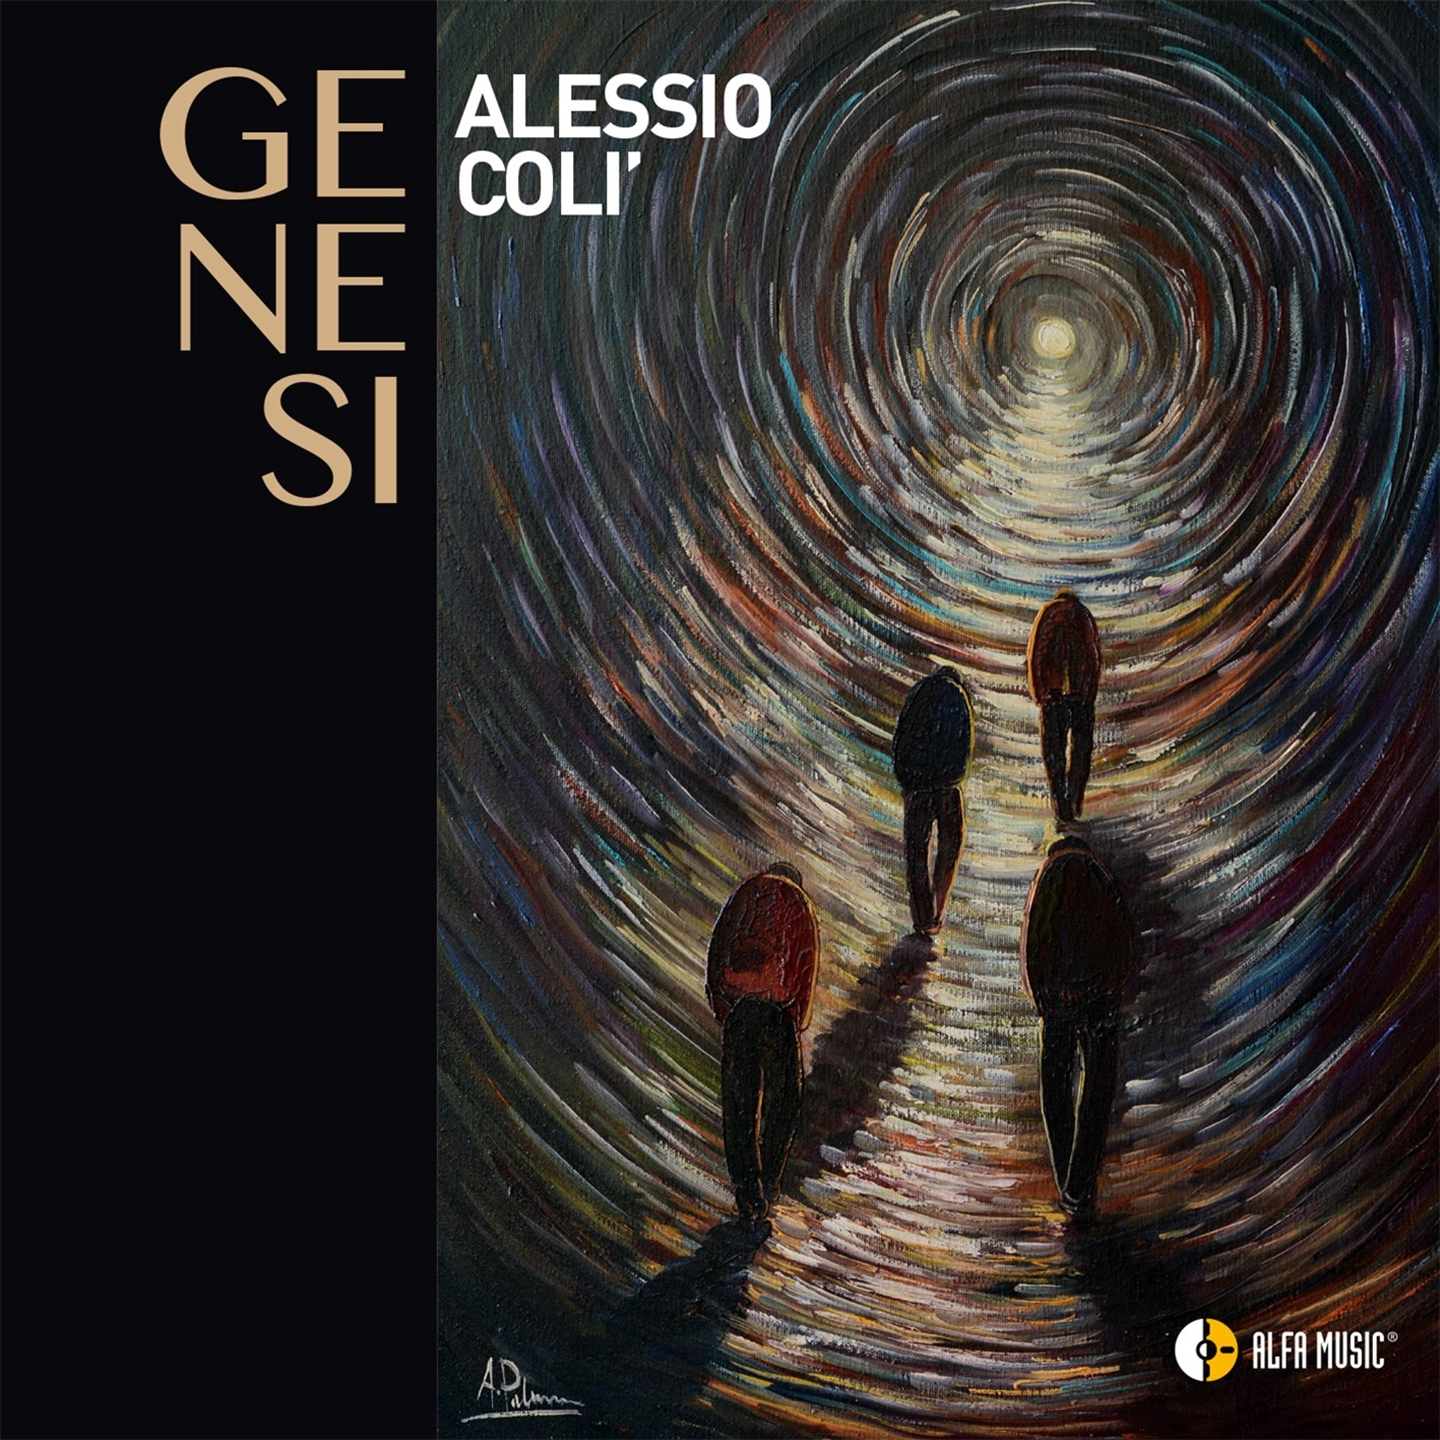 Alessio Coli' - Genesi - Bild 1 von 1